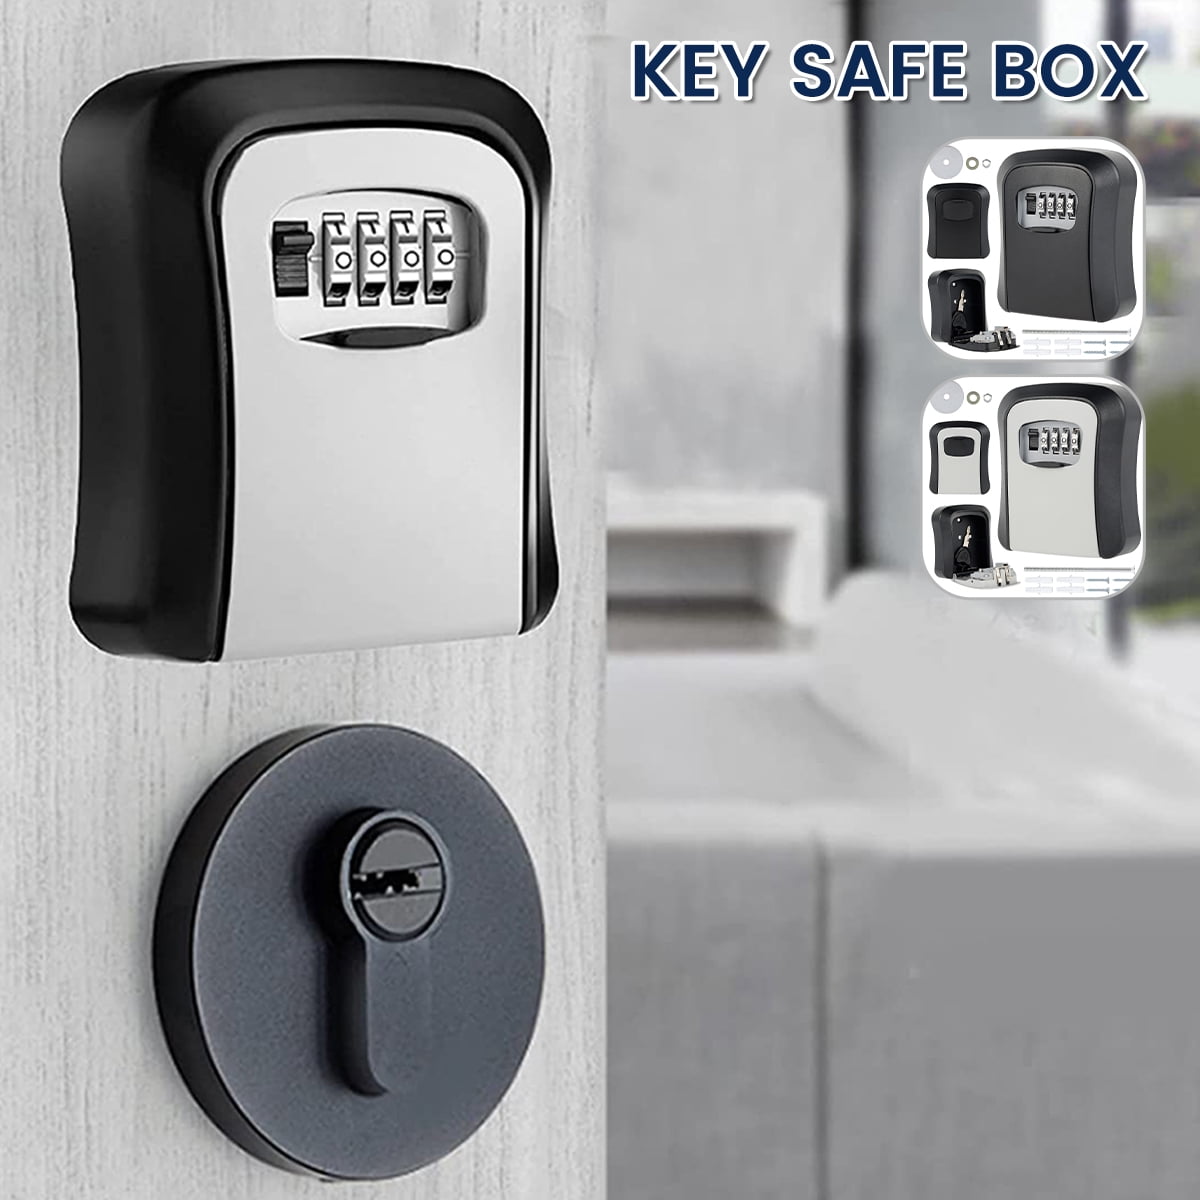 Door Hanger Medical Emergency Key Lock Box for Home Security Welfare Check 